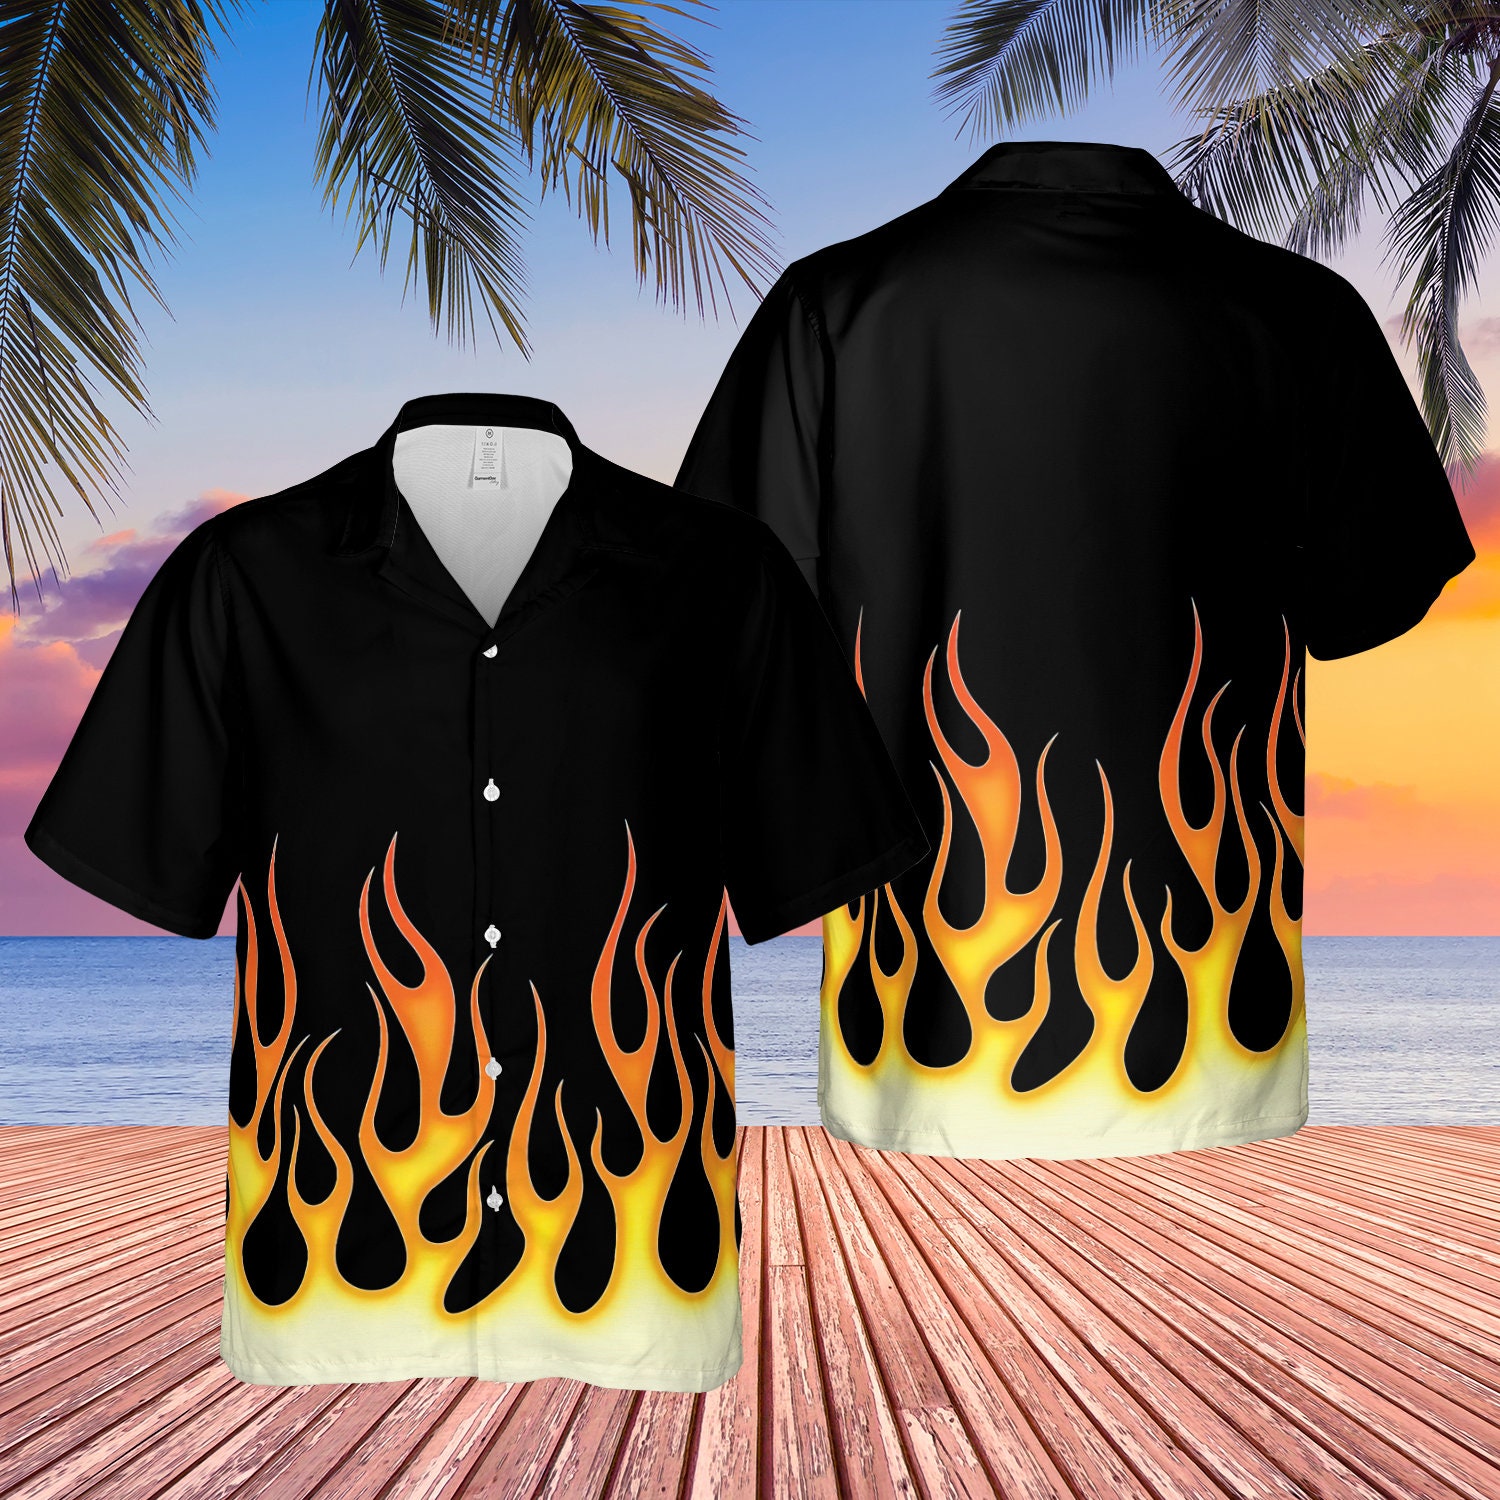 Vintage Blue Flames Button Down Shirt Fire Malibu Dreams Sz XL 90s Y2K Guy  Fieri